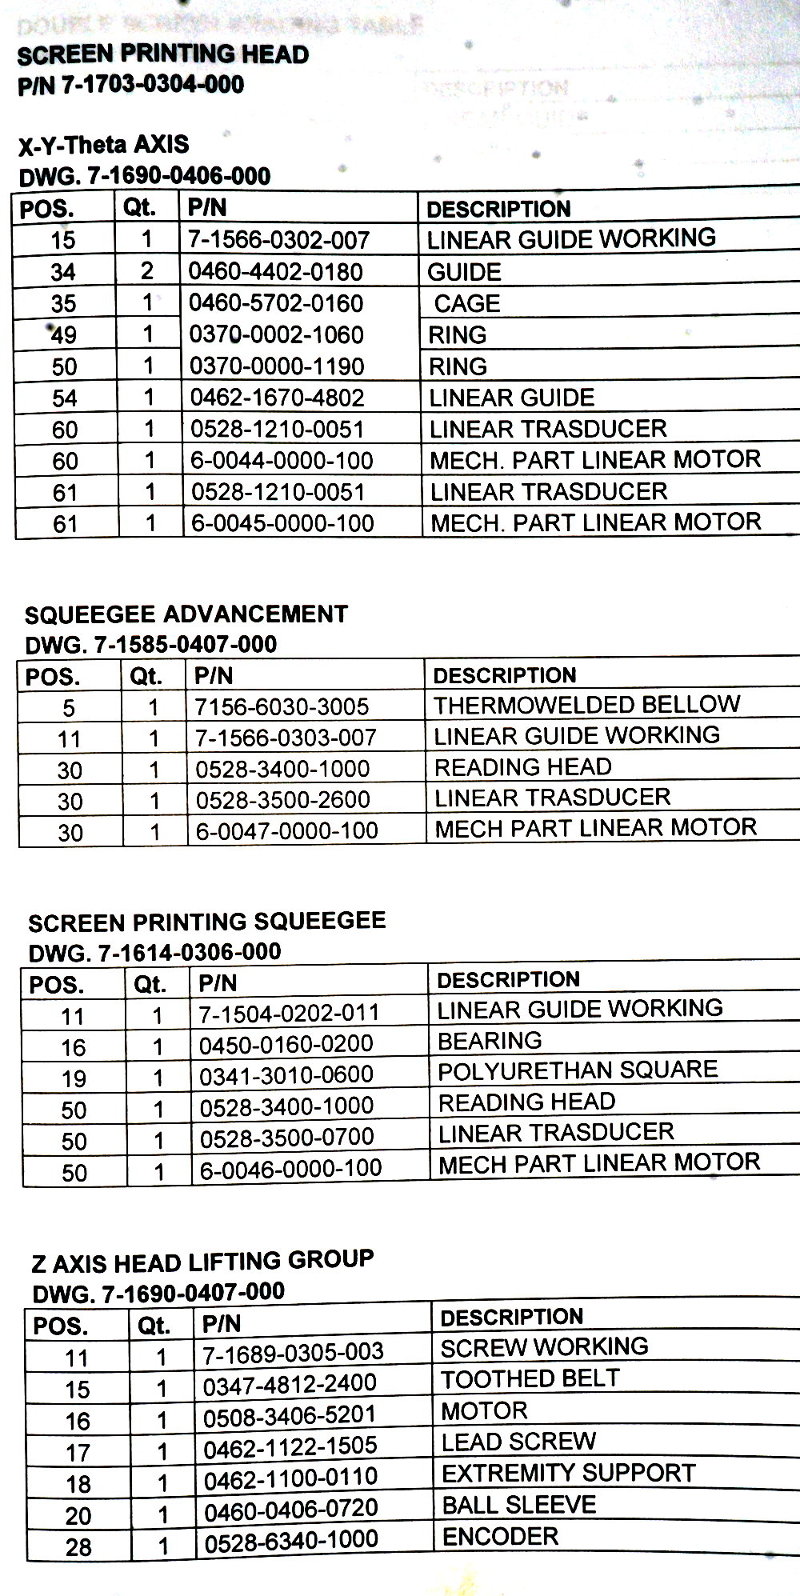 Baccini Screen Printer 1